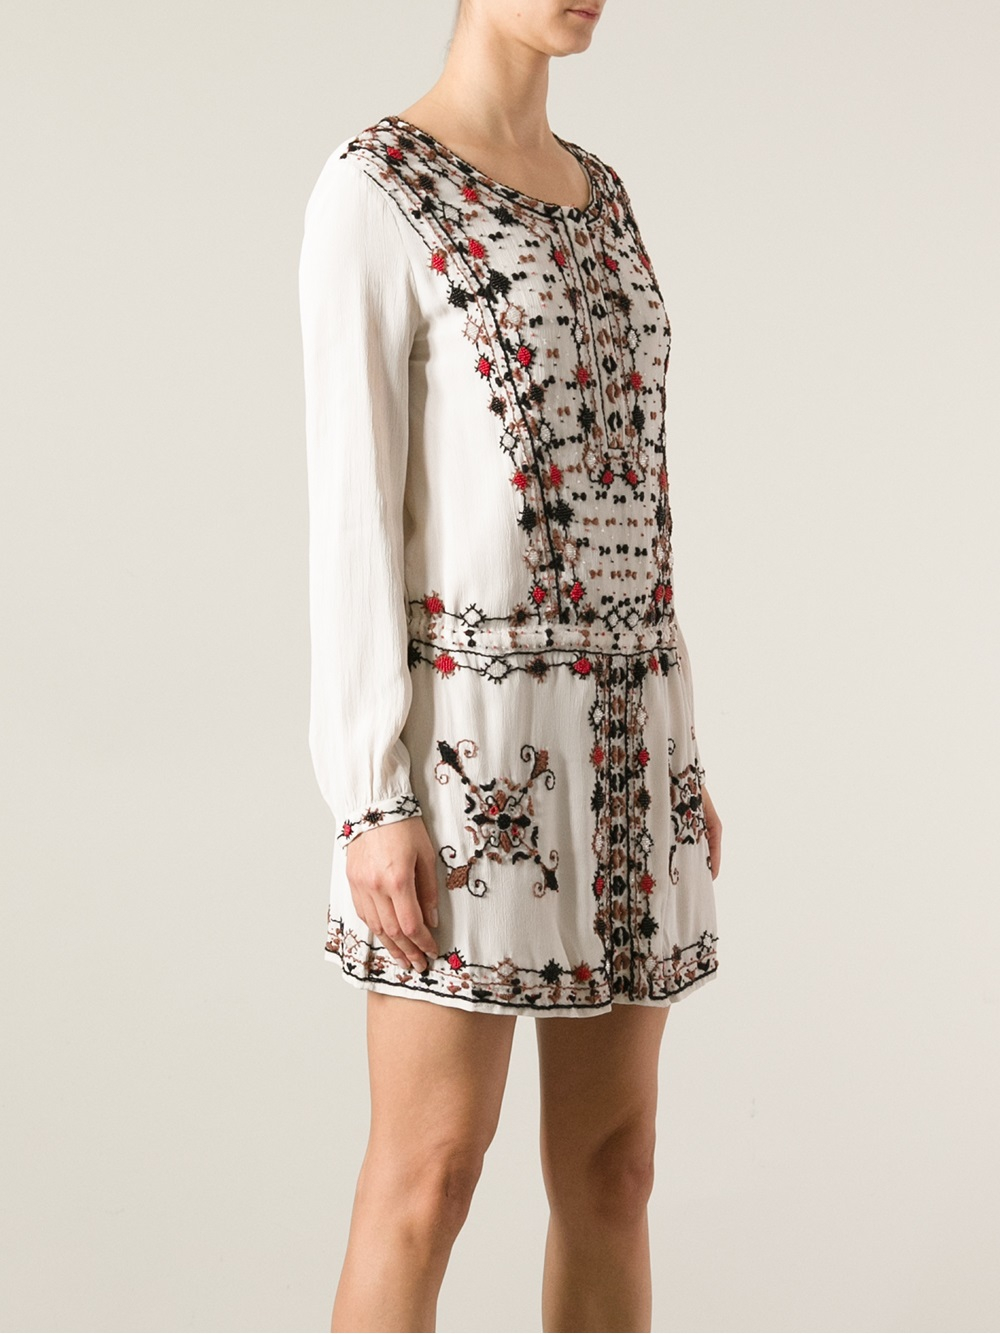 Dress Batik - Unicef UK Market | Batik Strapless Maxi Dress from